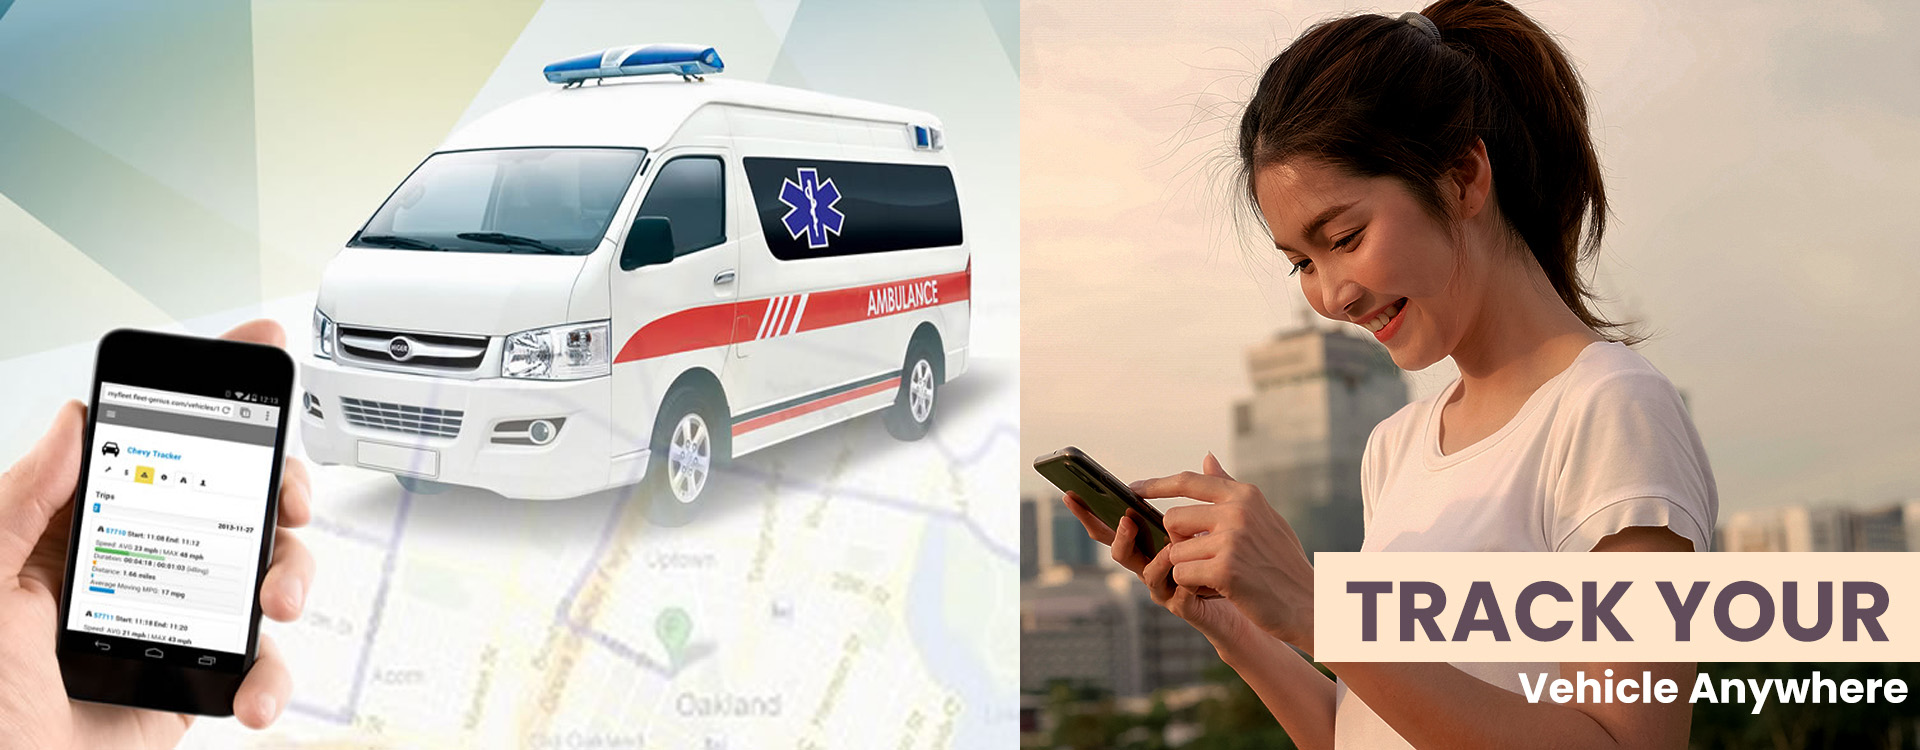 GPS for ambulance